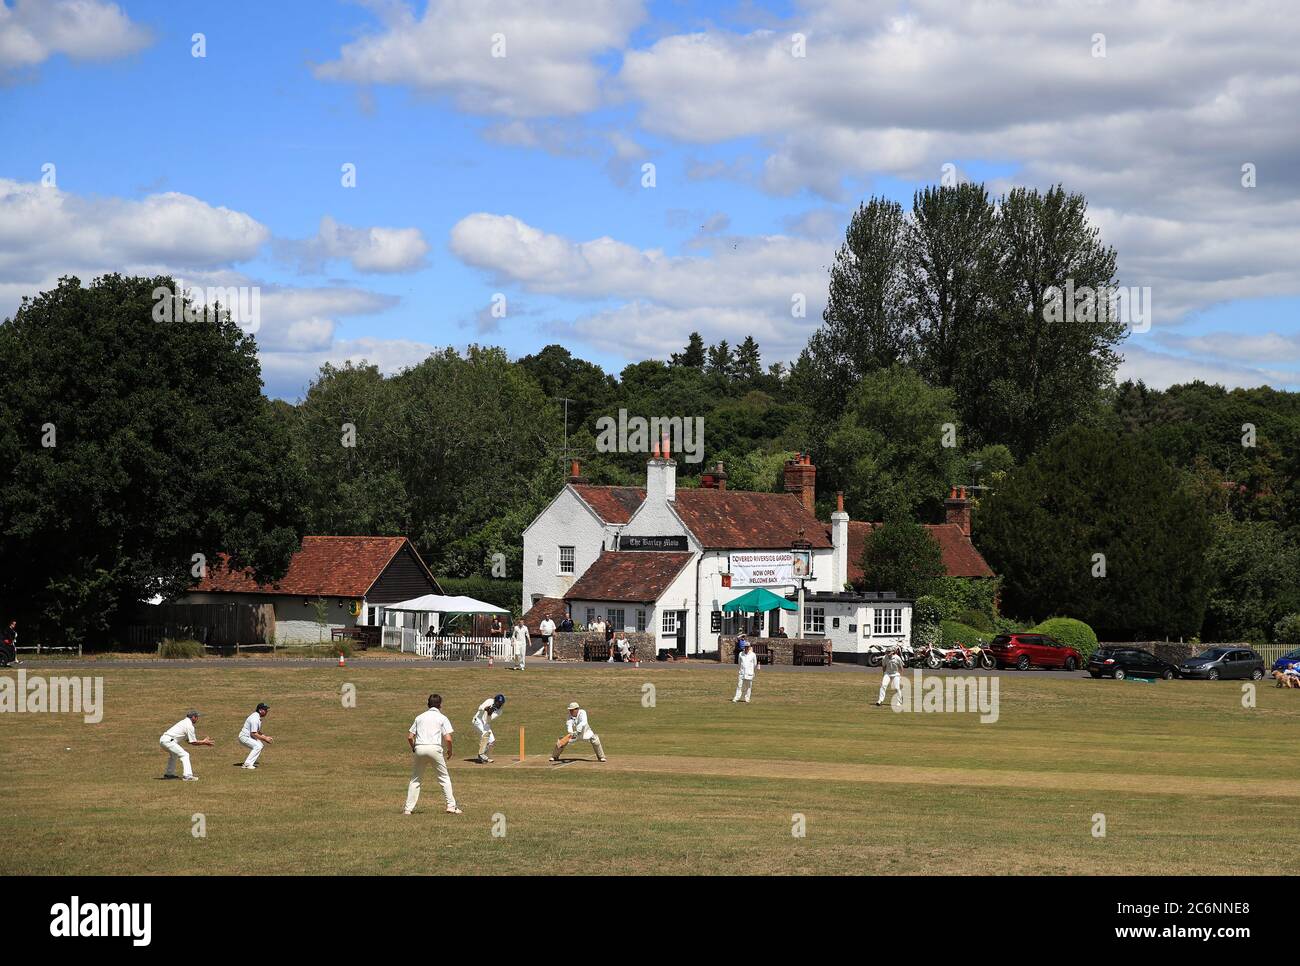 Inter village friendly cricket match at Tilford Cricket Club, Farnham. Stock Photo